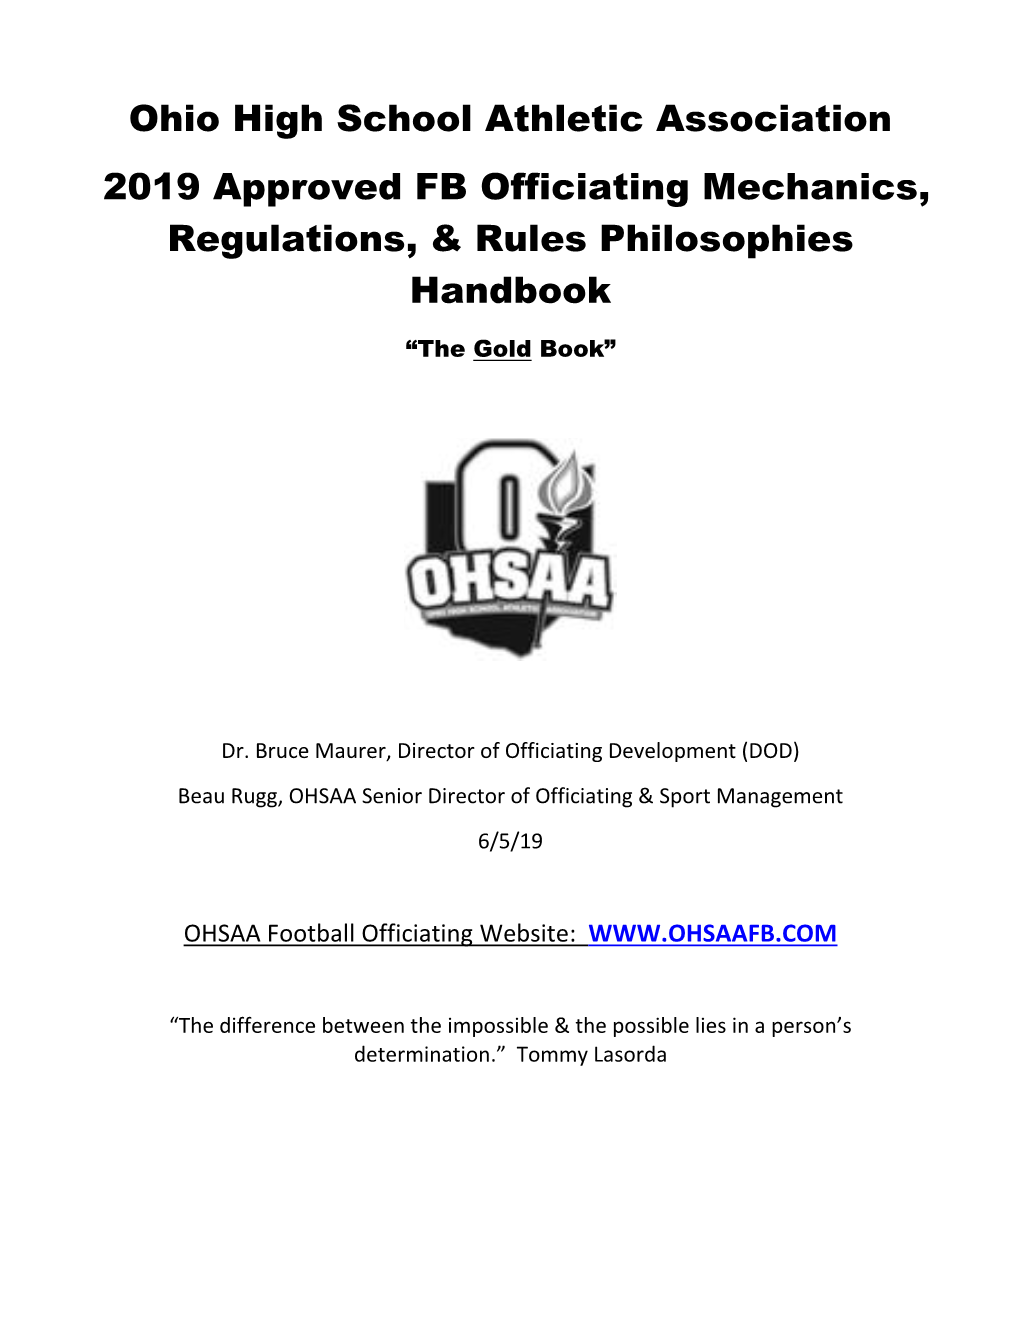 Ohio High School Athletic Association 2019 Approved FB Officiating Mechanics, Regulations, & Rules Philosophies Handbook